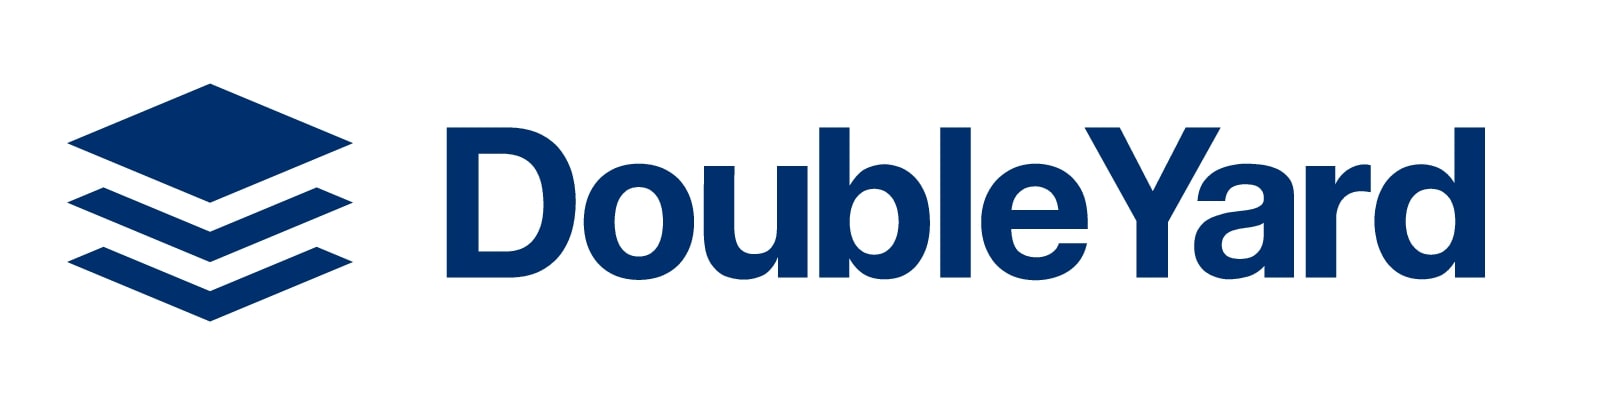 Doubleyard logo